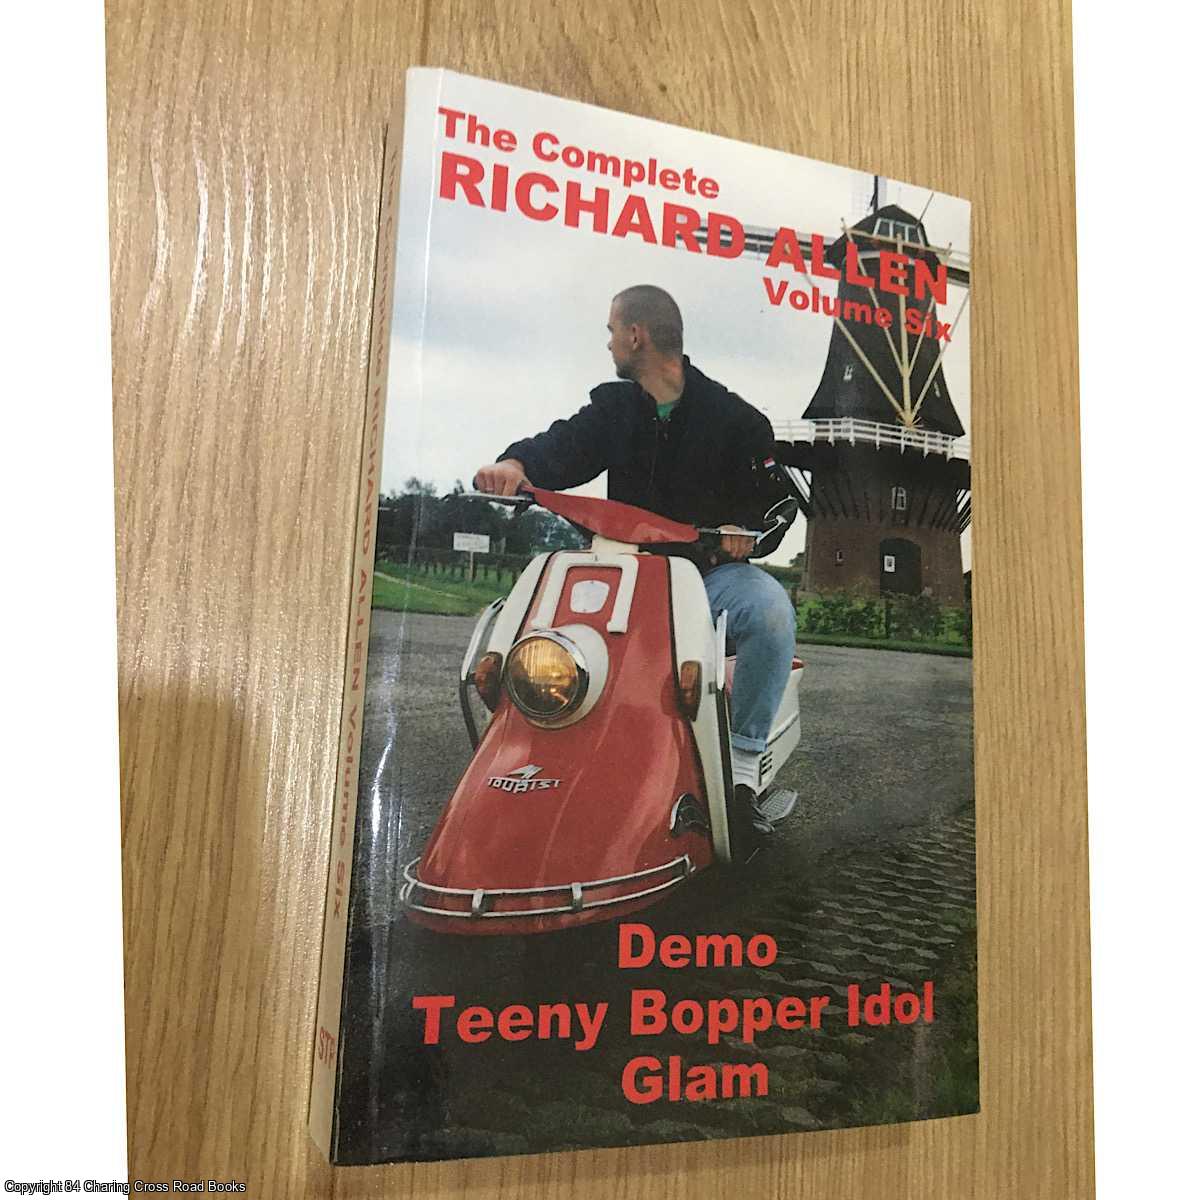 Allen, Richard - The Complete Richard Allen Volume Six. Demo, Teeny Bopper Idol, Glam.